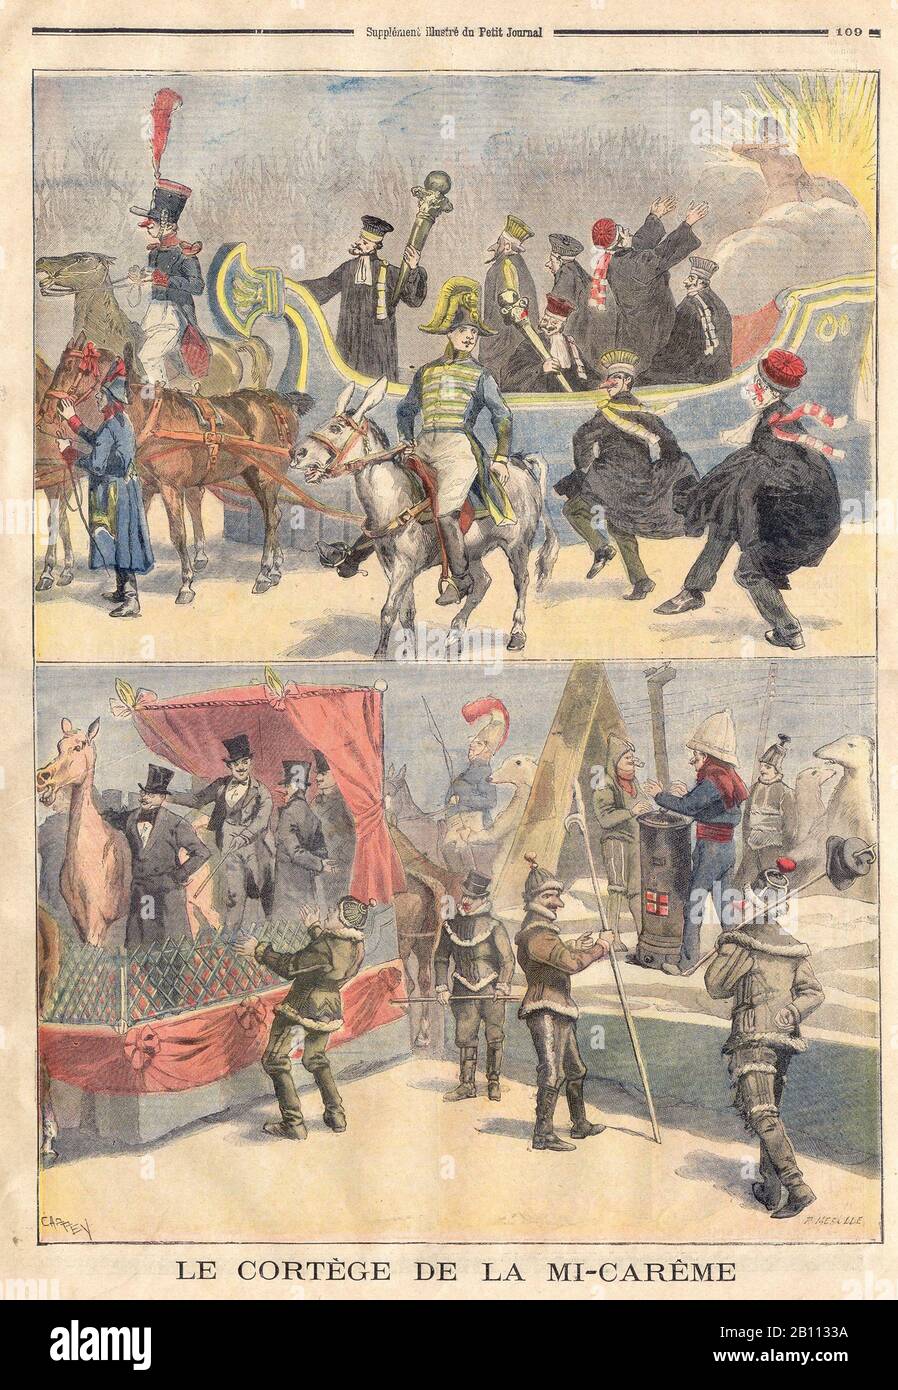 Cortège DE LA MI-CARÊME - En el periódico ilustrado francés 'le Petit Journal' - 1897 Foto de stock